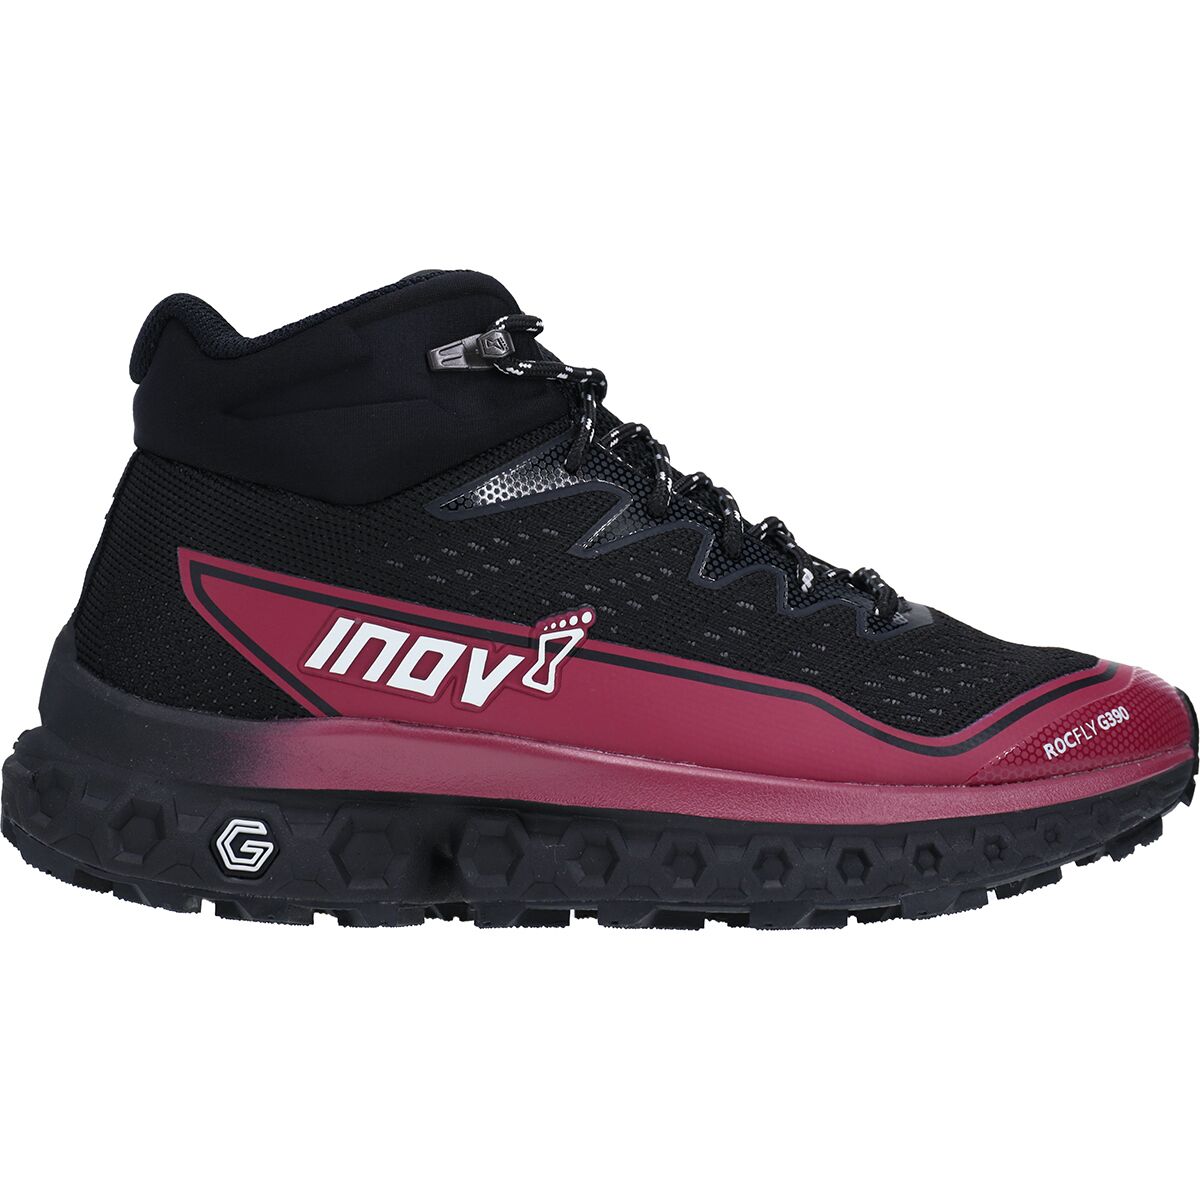 Inov 8 RocFly G 390 Hiking Shoe - Women's Black/Pink 10.0